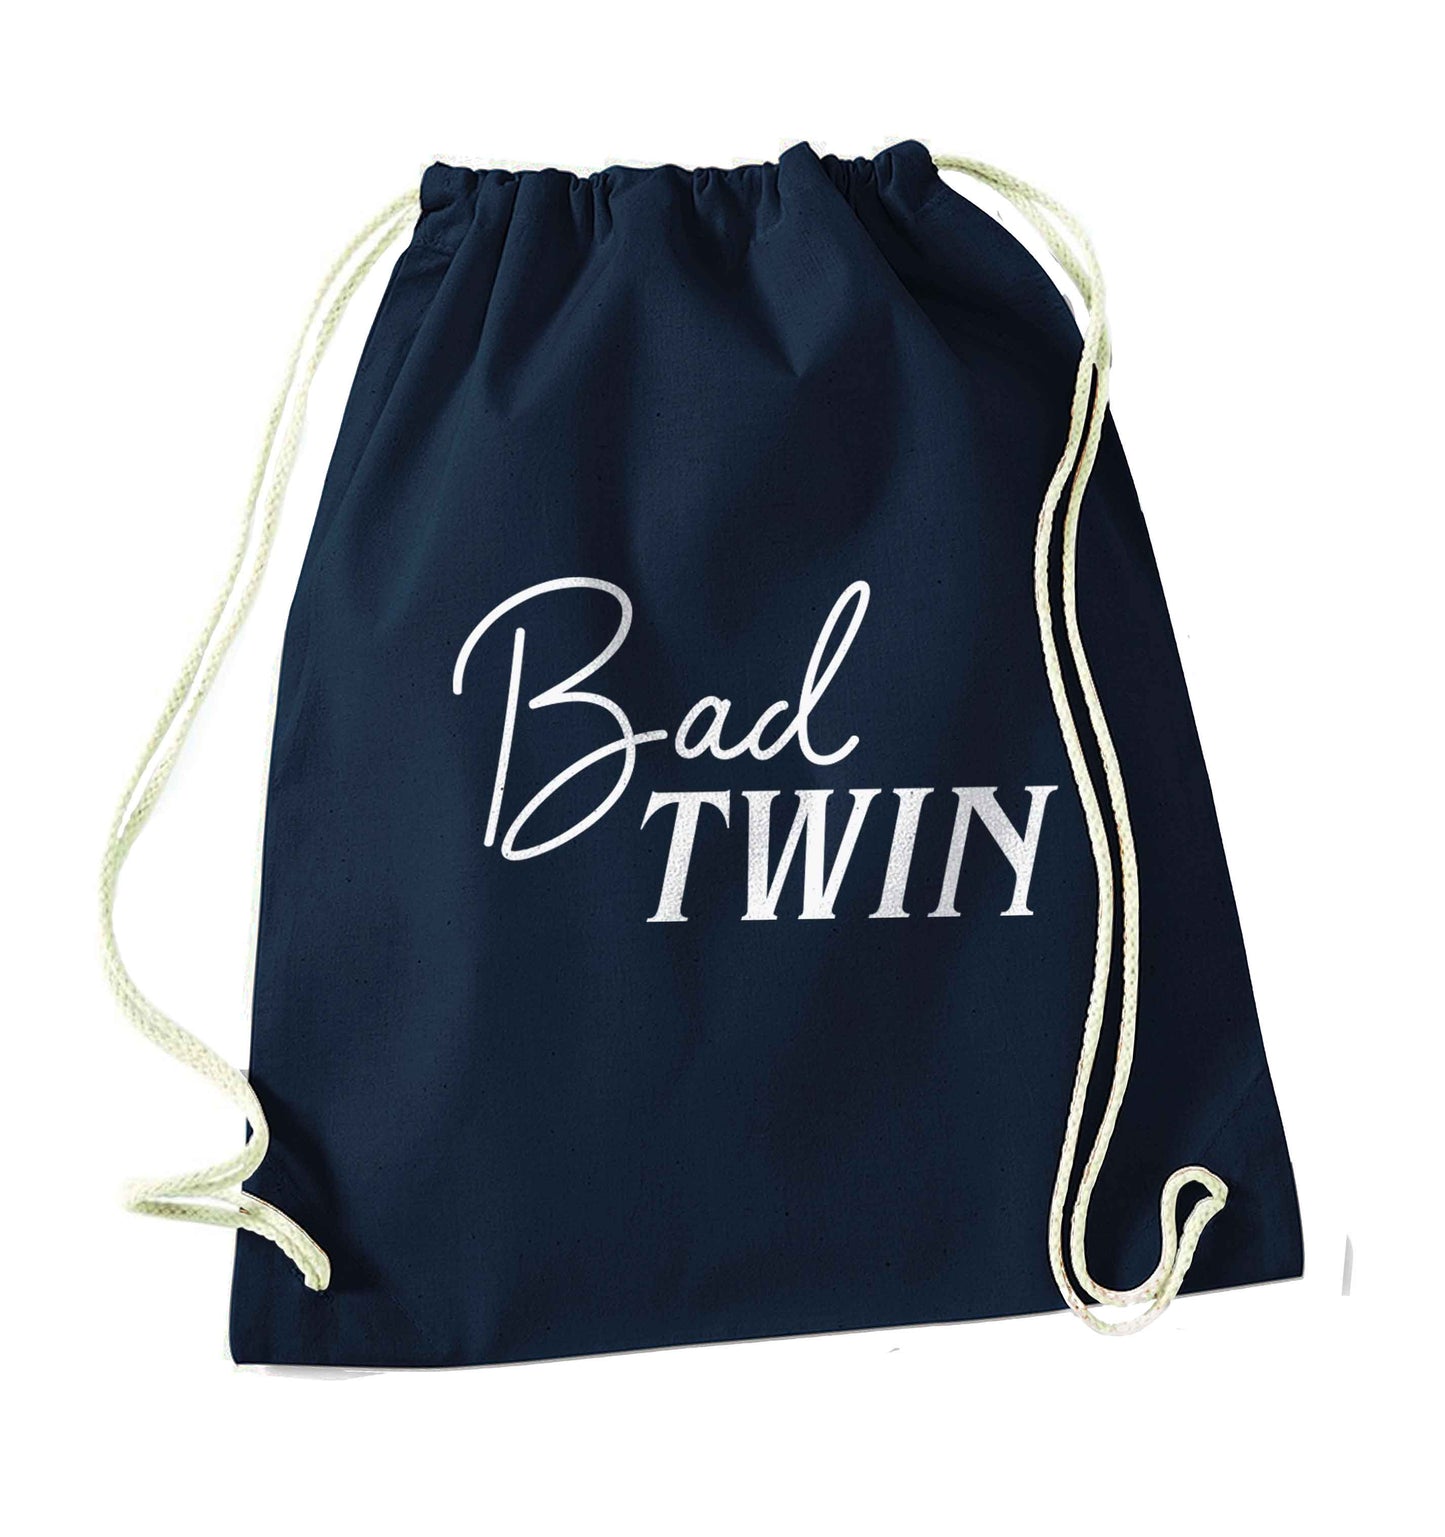 Bad twin navy drawstring bag